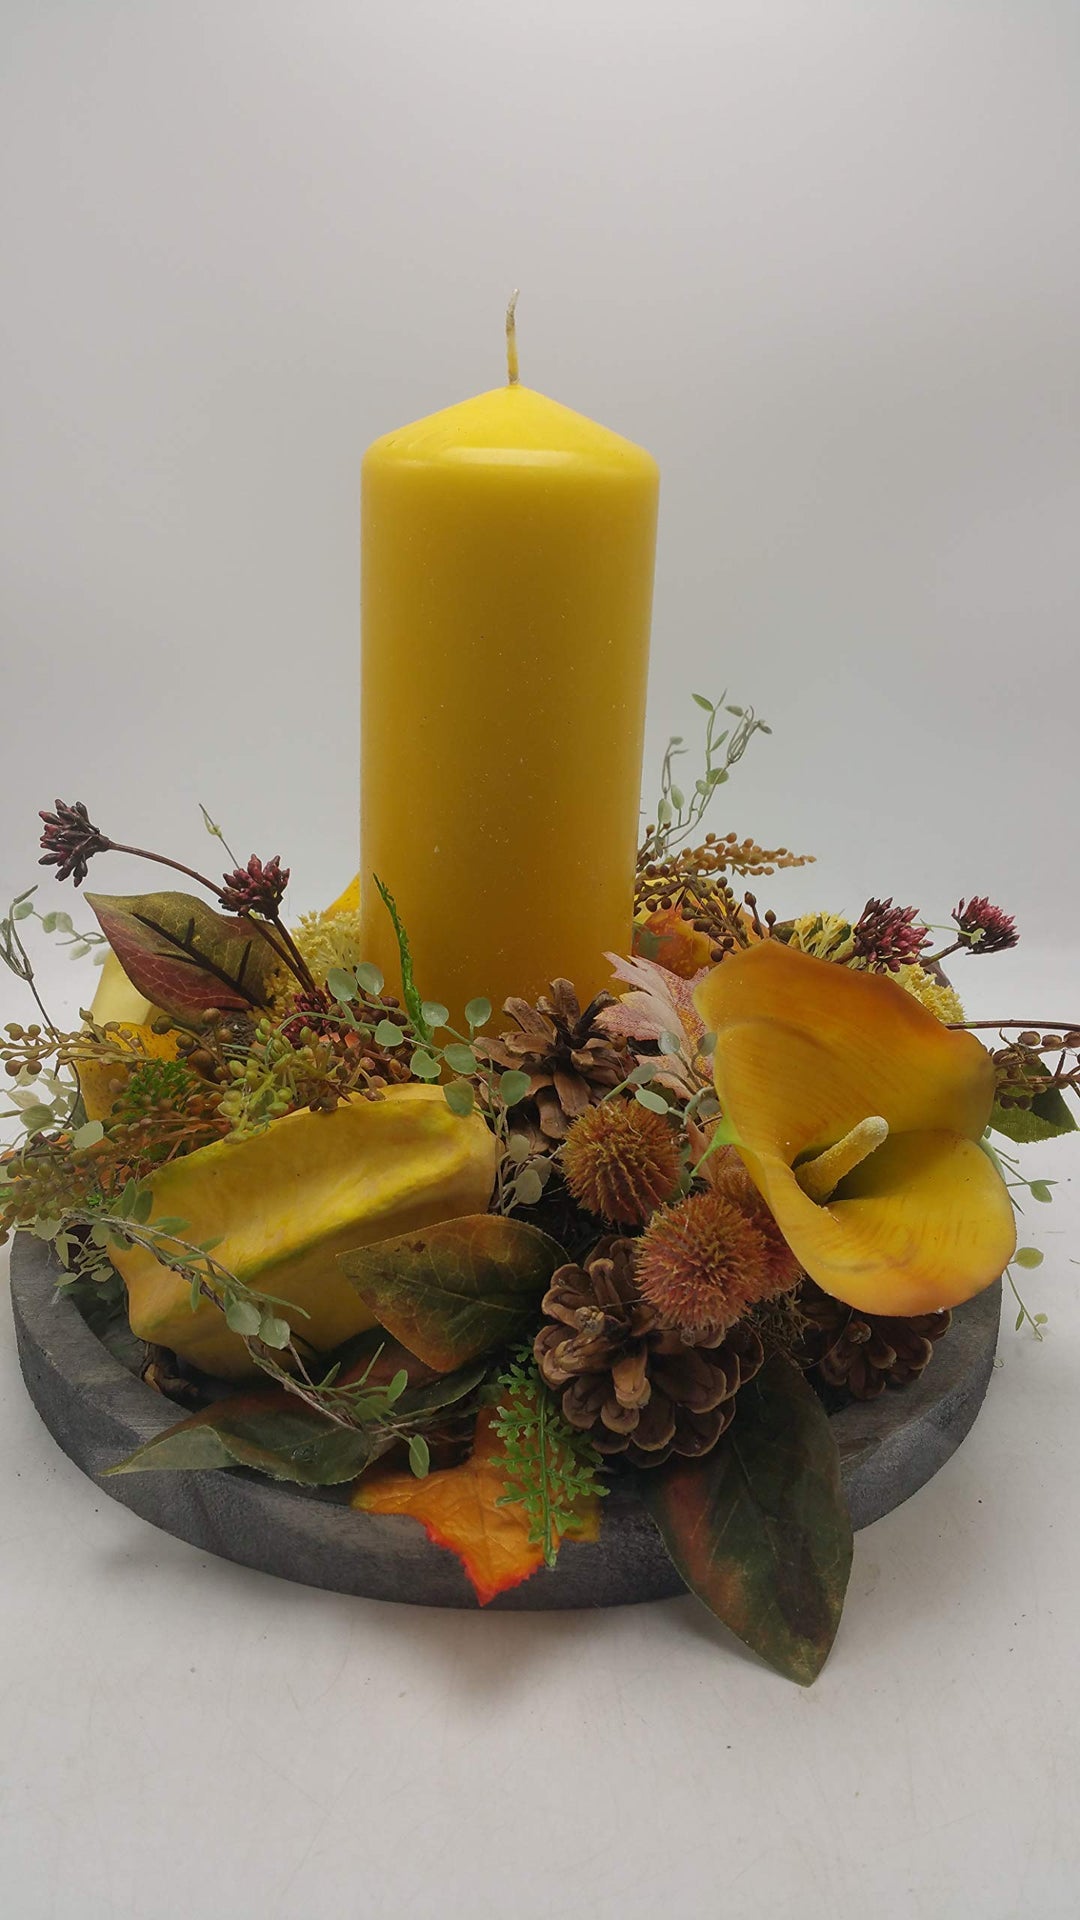 Tischgesteck Herbstgesteck Kunstfloristik Kerze Calla Laub Birnen Sternfrucht